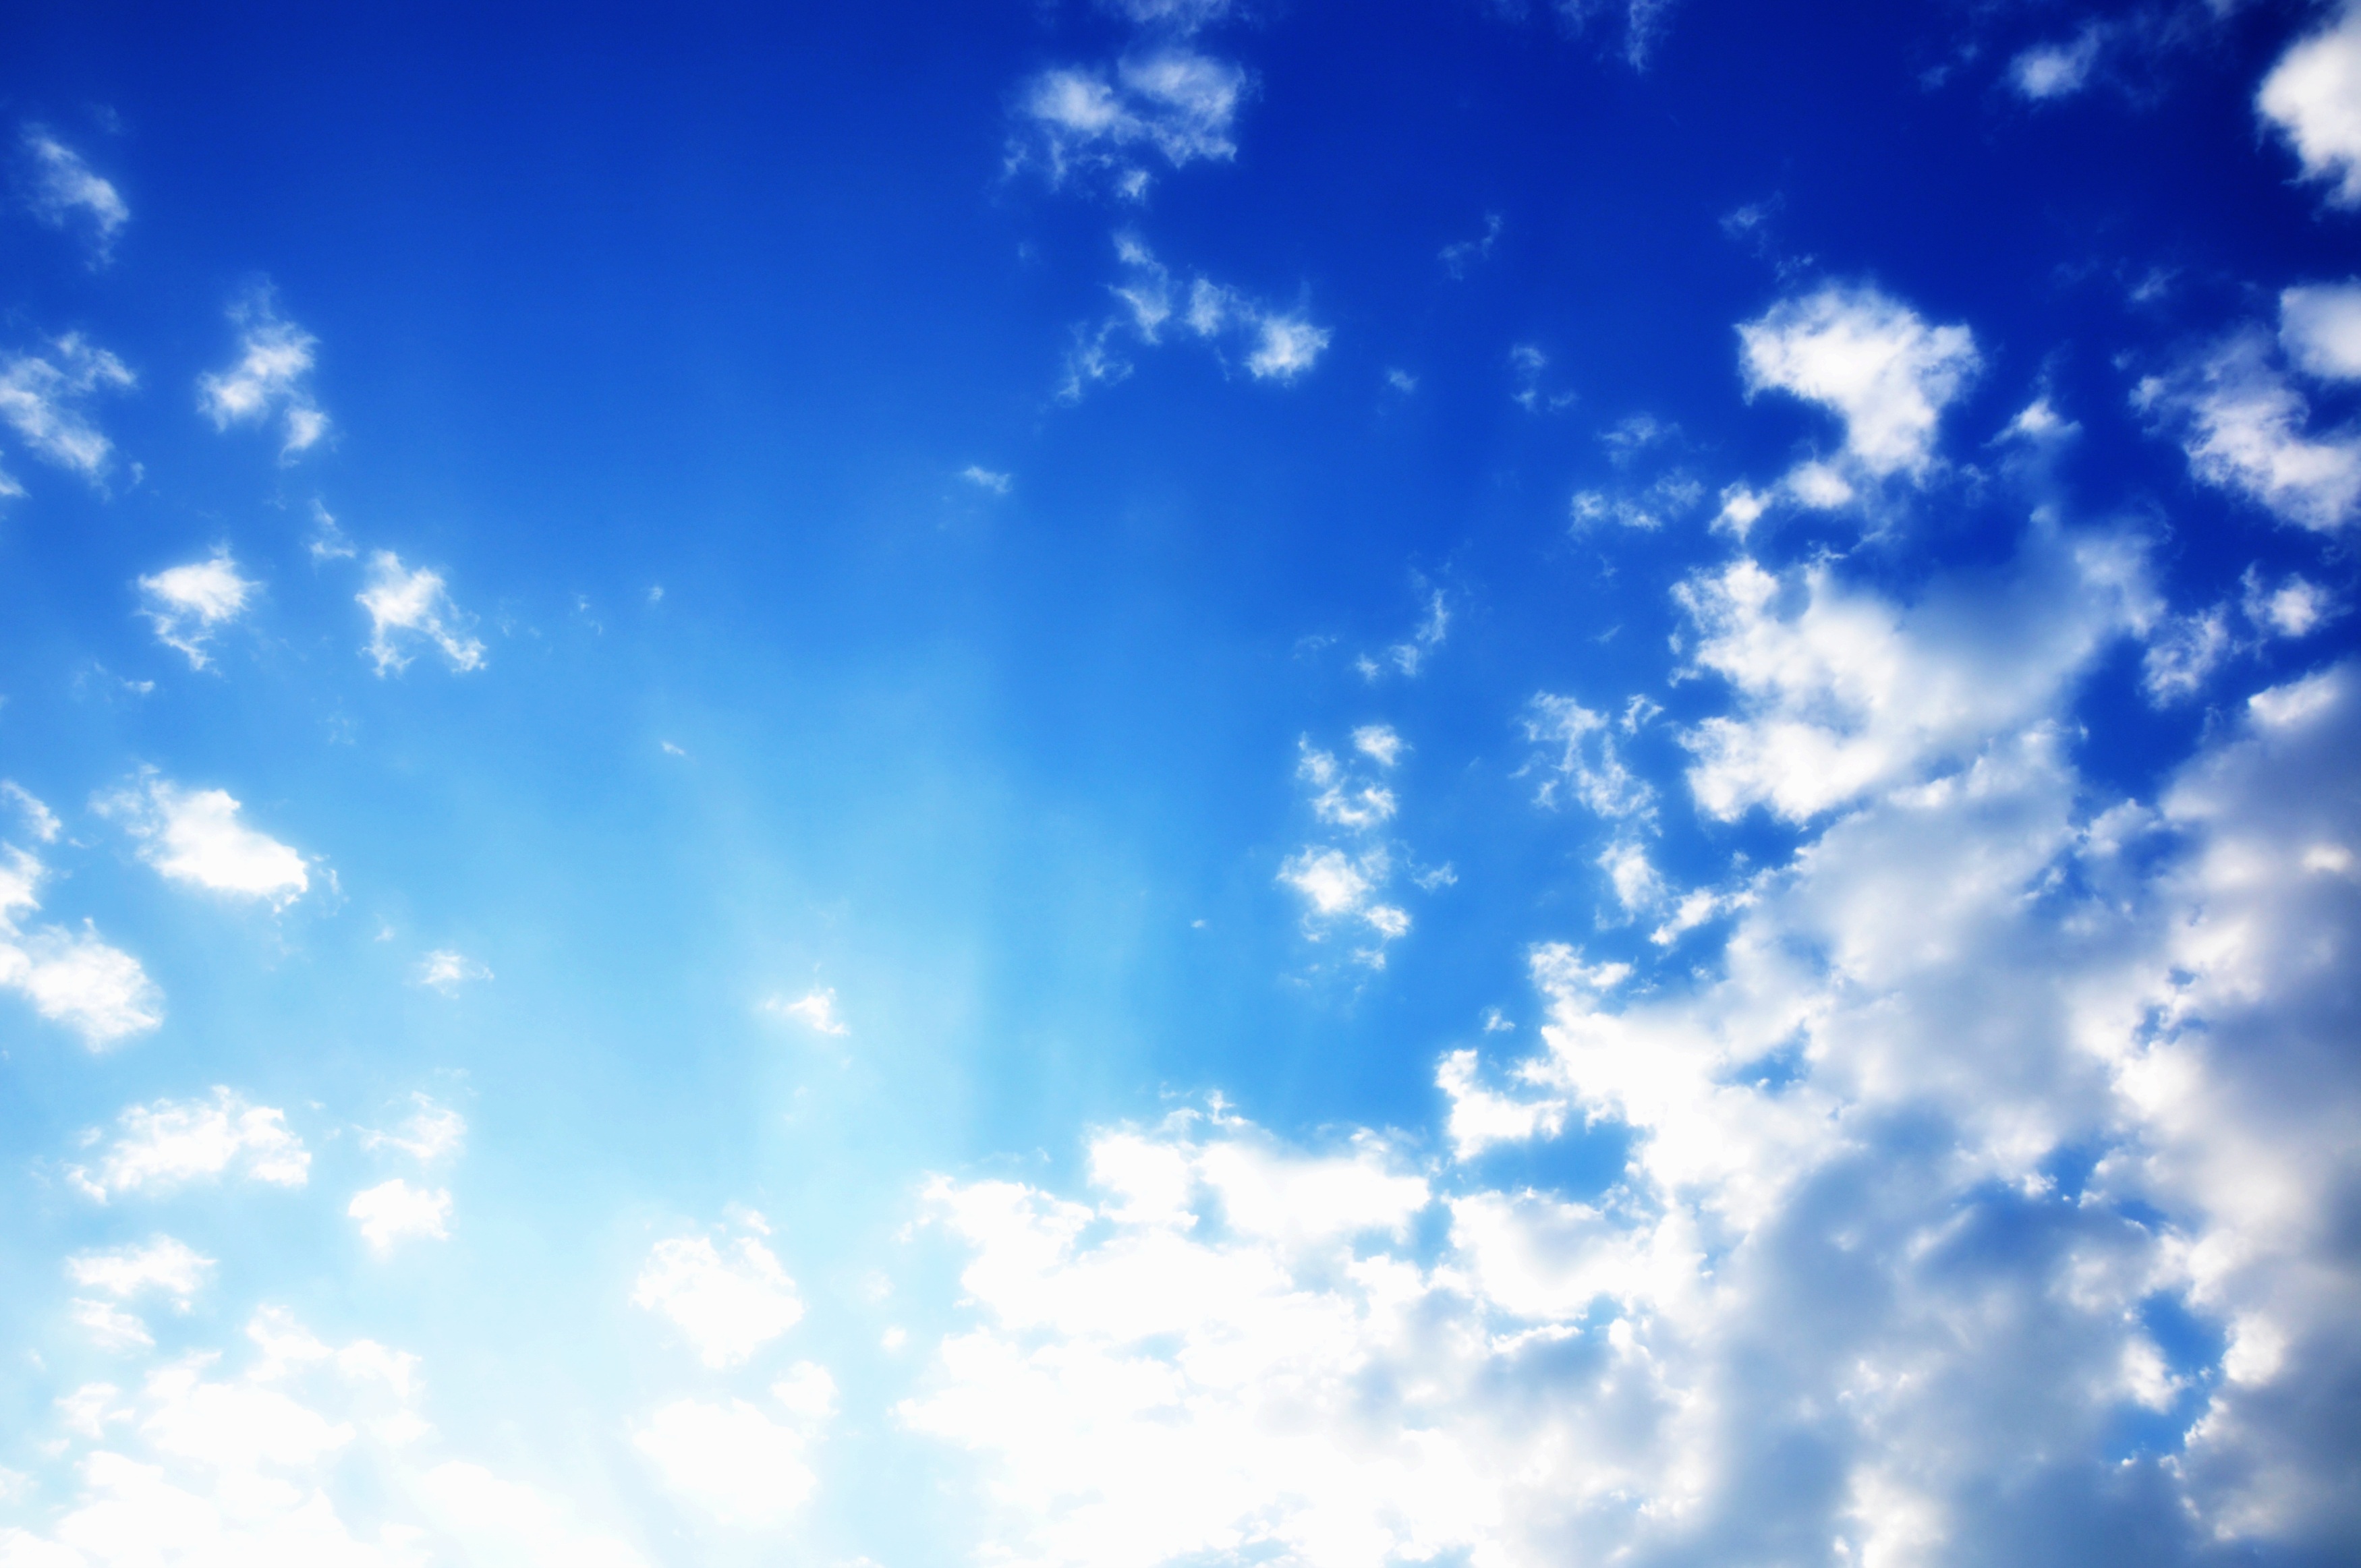 Бесплатное фото Красивое синее небо с облаками